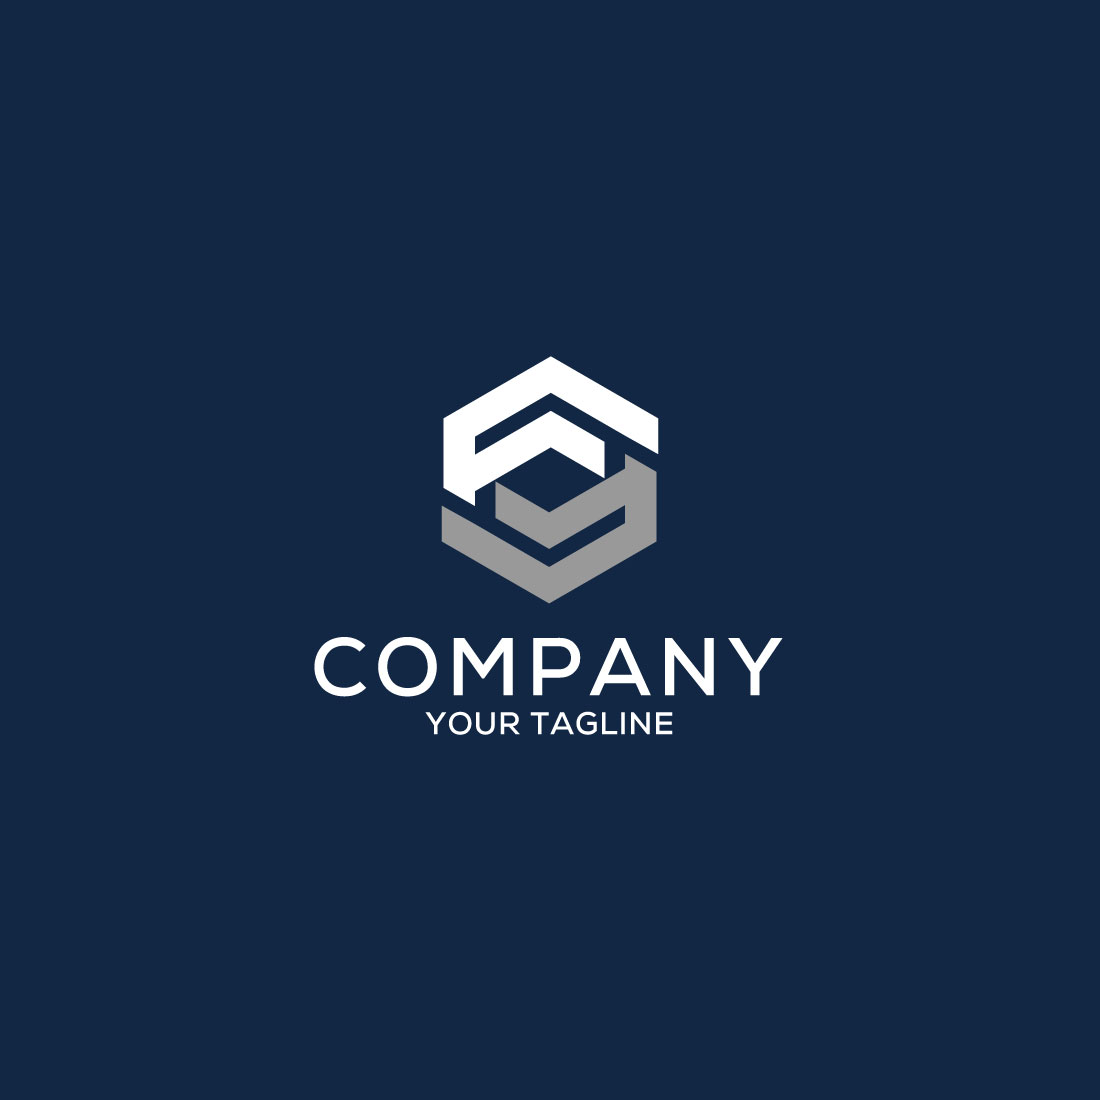 Hexagonal logo for a company.